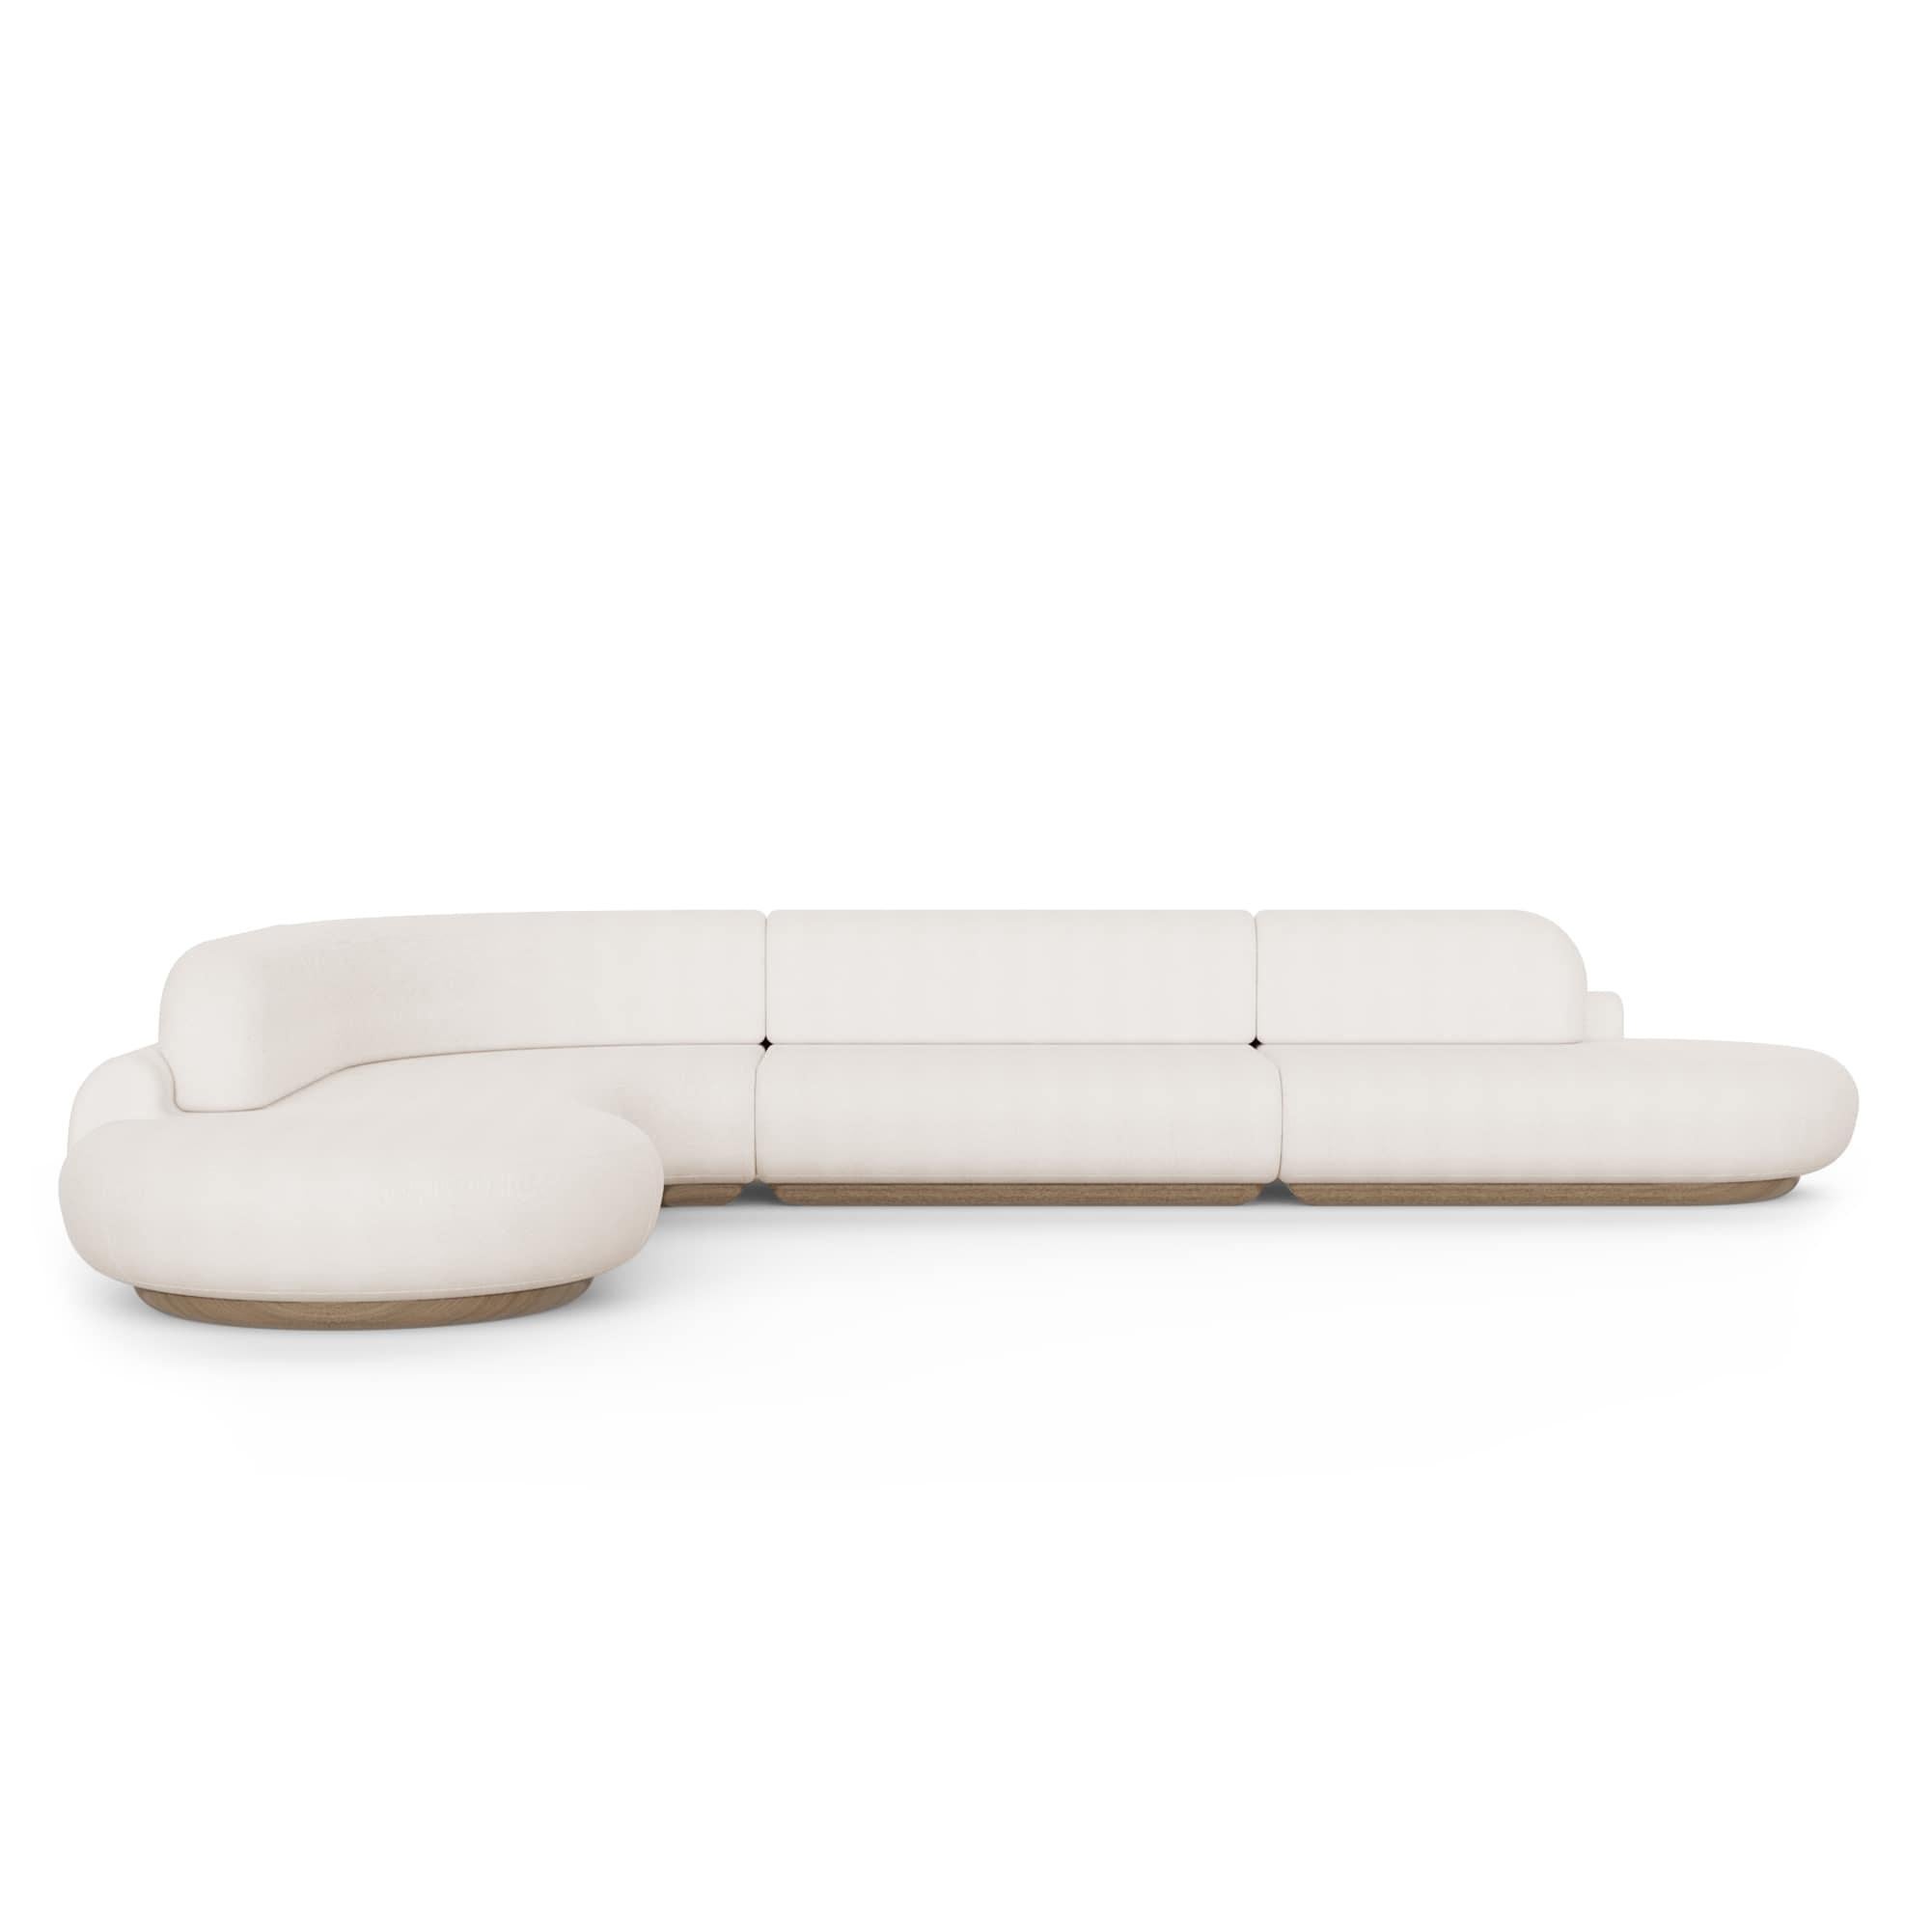 Upholstery Naked Sofa by DOOQ